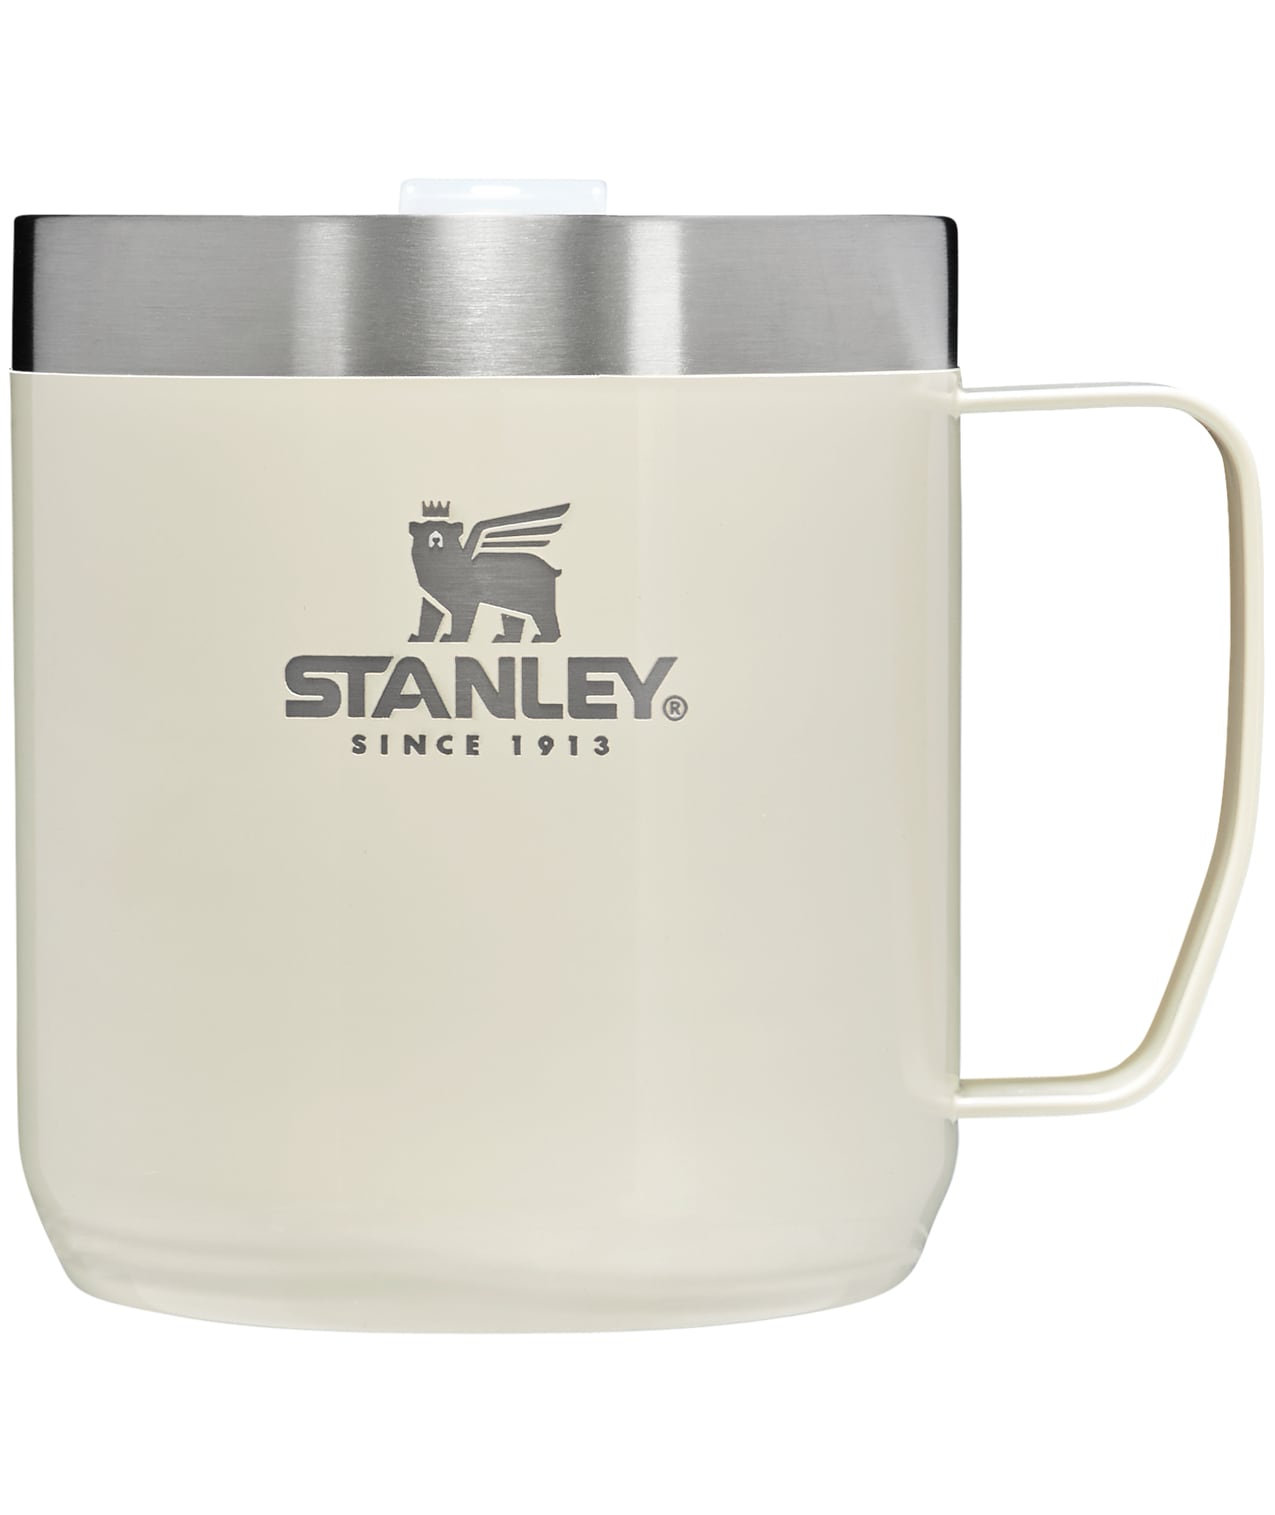 Stanley 12-fl oz Stainless Steel Insulated Travel Mug